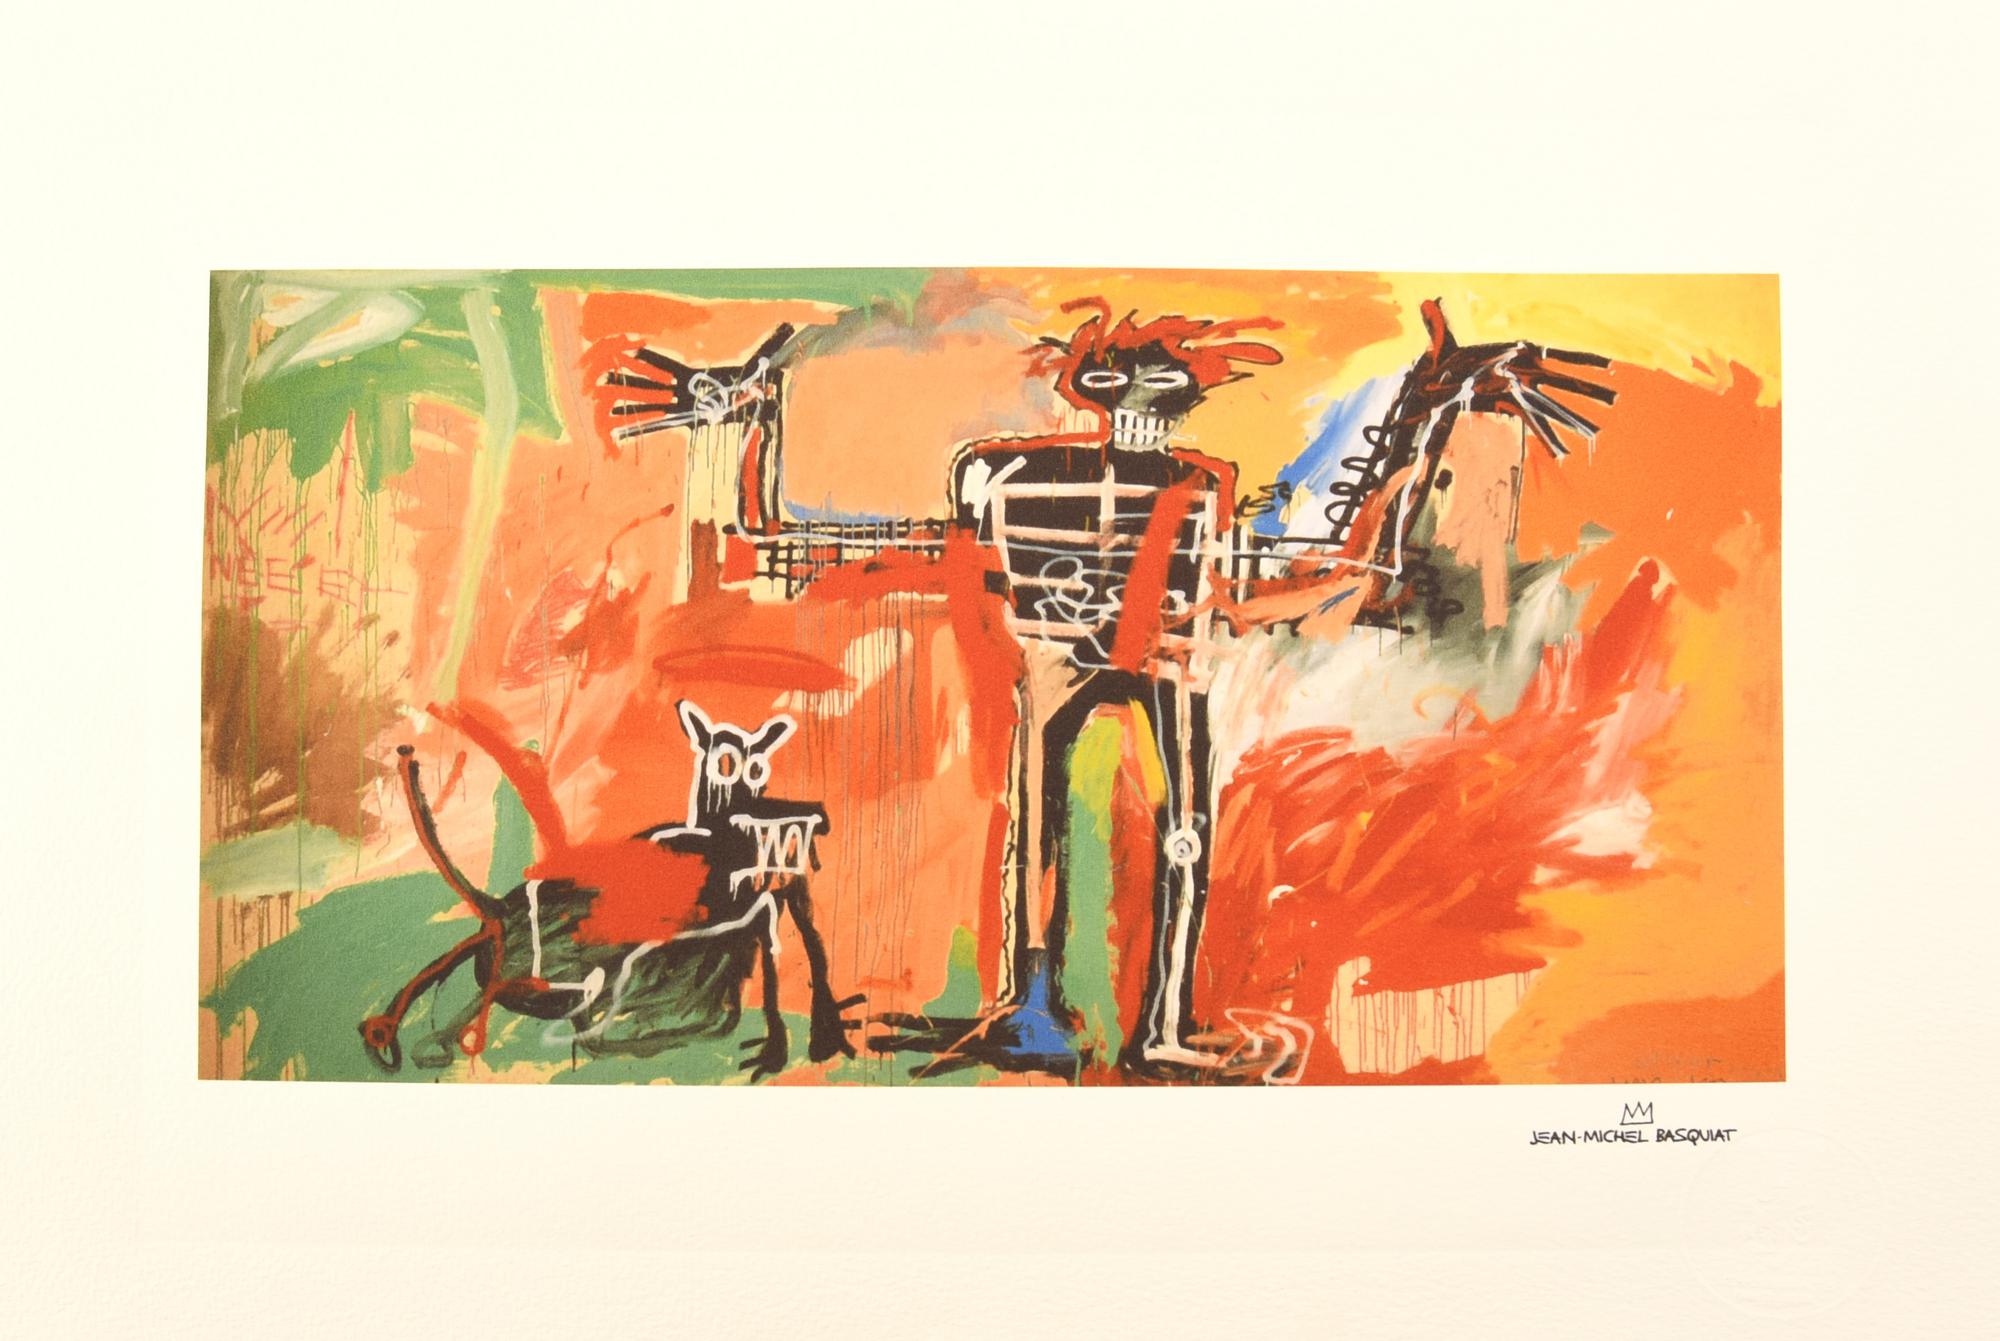 D'apres Jean Michel Basquiat BOY AND DOG IN A JOHNNYPUMP fototipo...